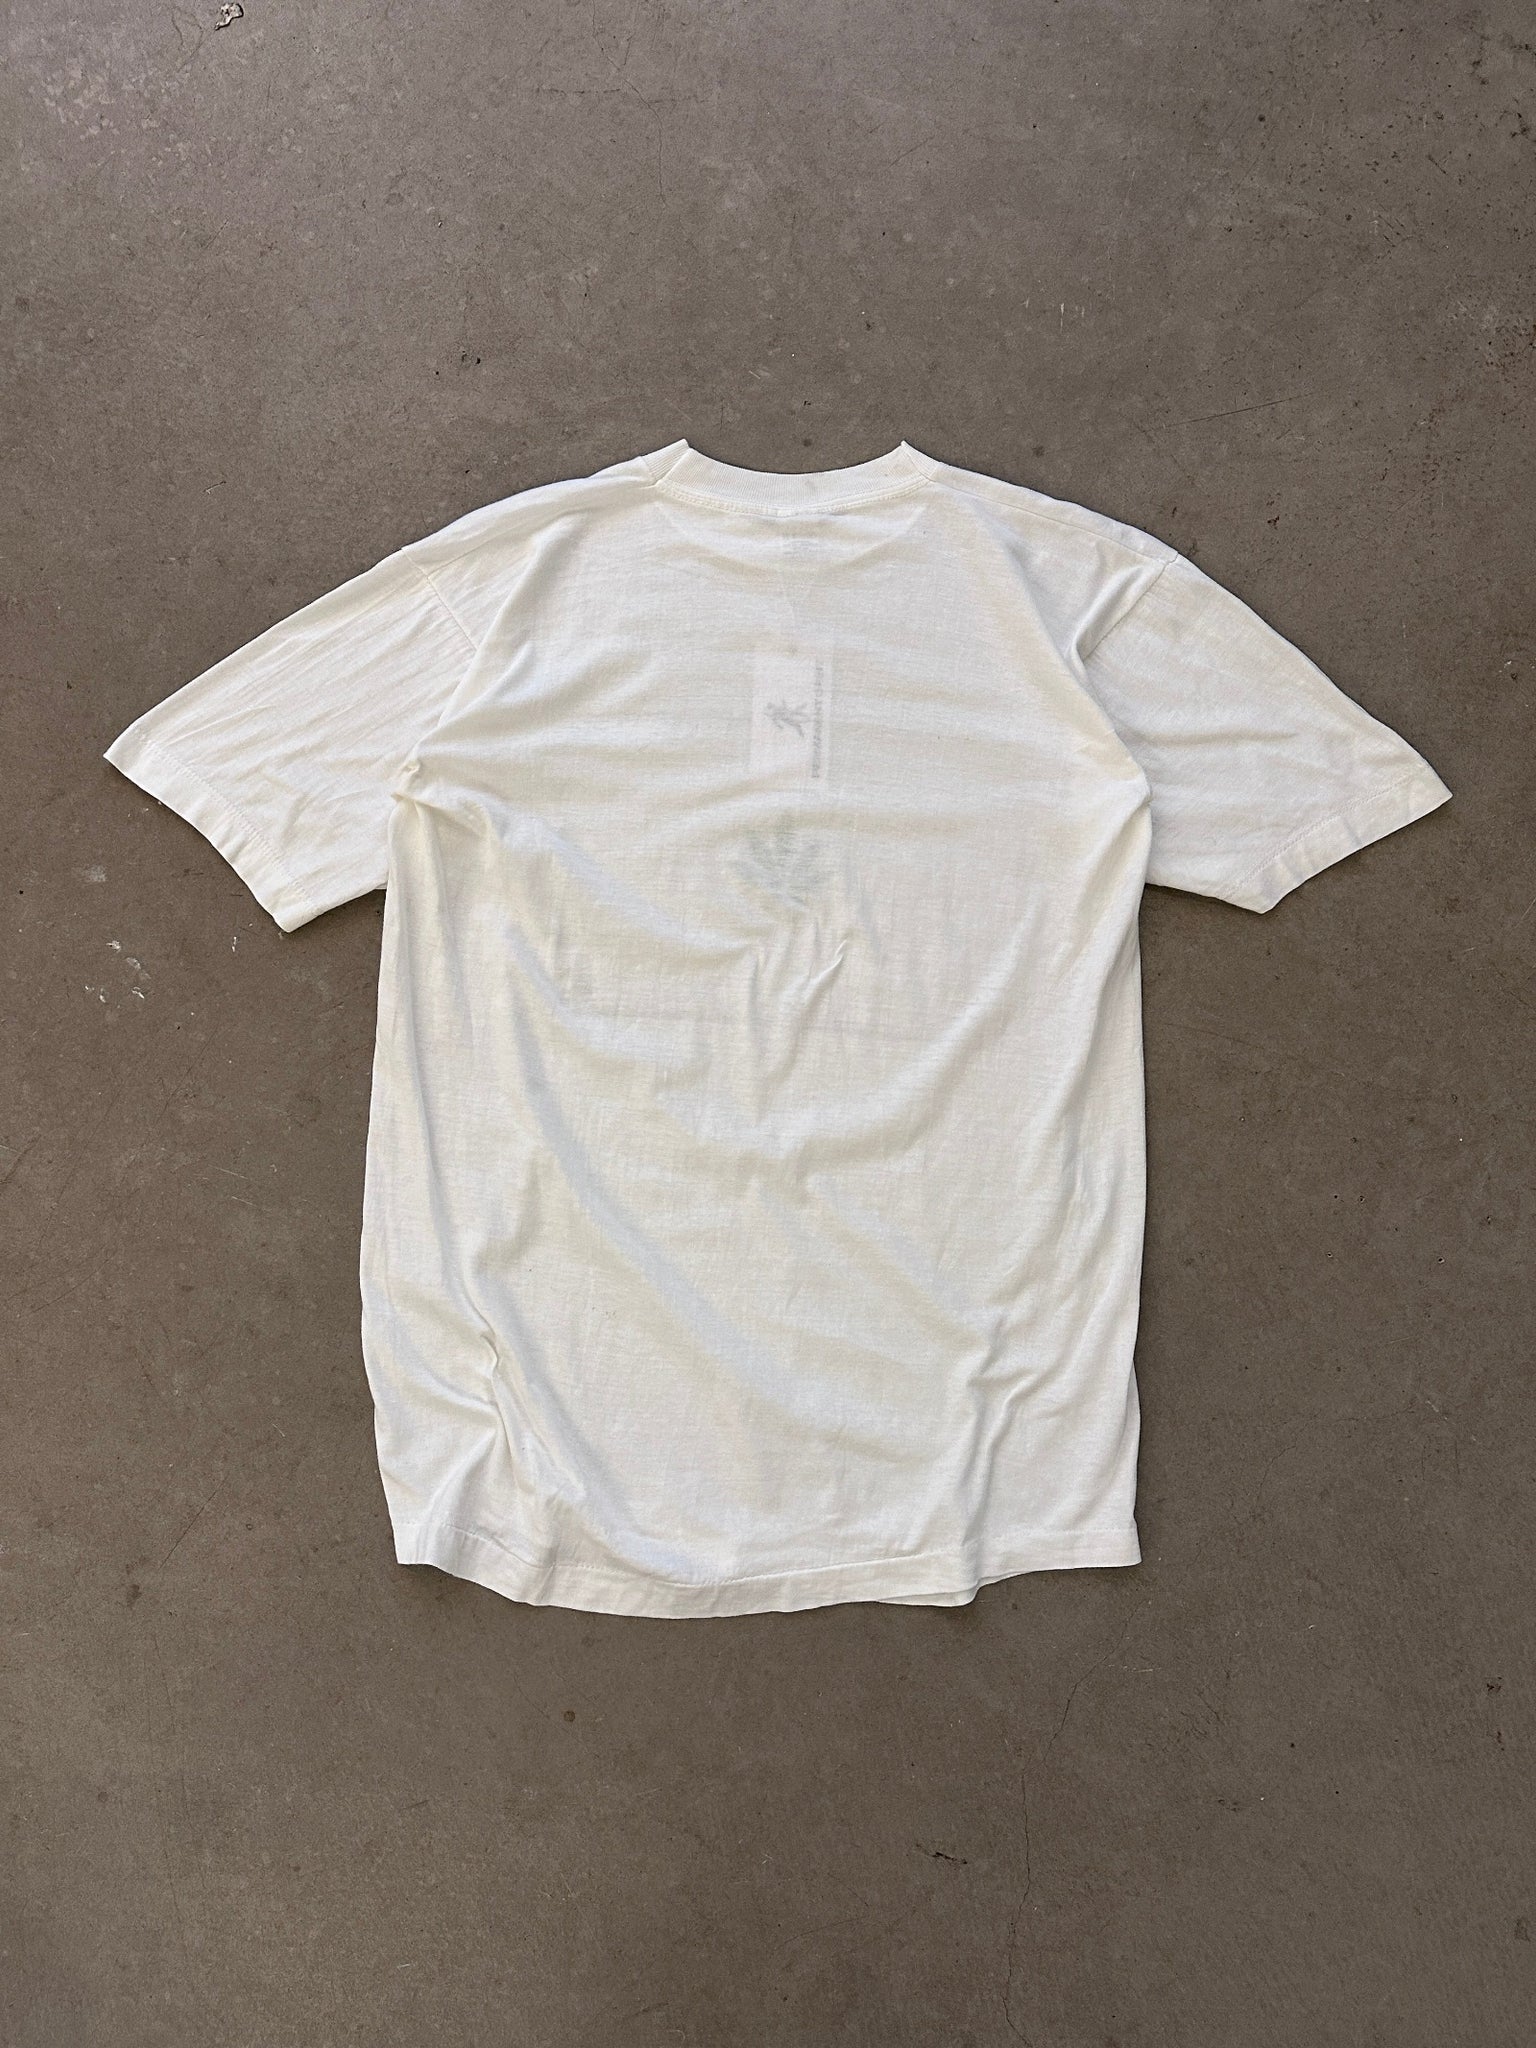 1980's International Marijuana Permit T-Shirt - M